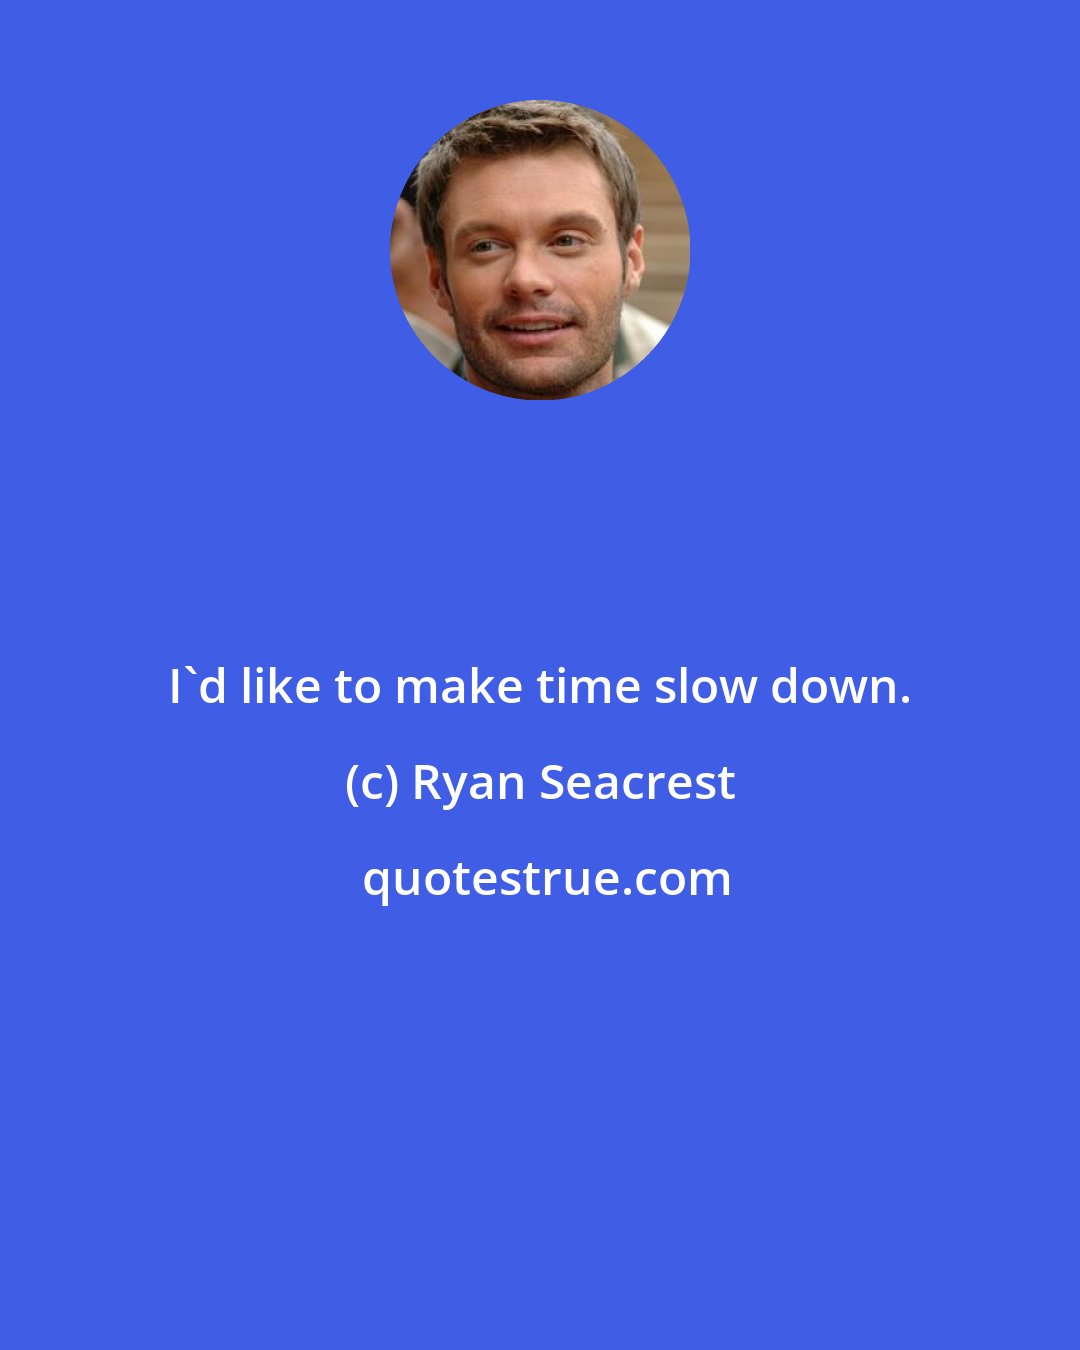 Ryan Seacrest: I'd like to make time slow down.